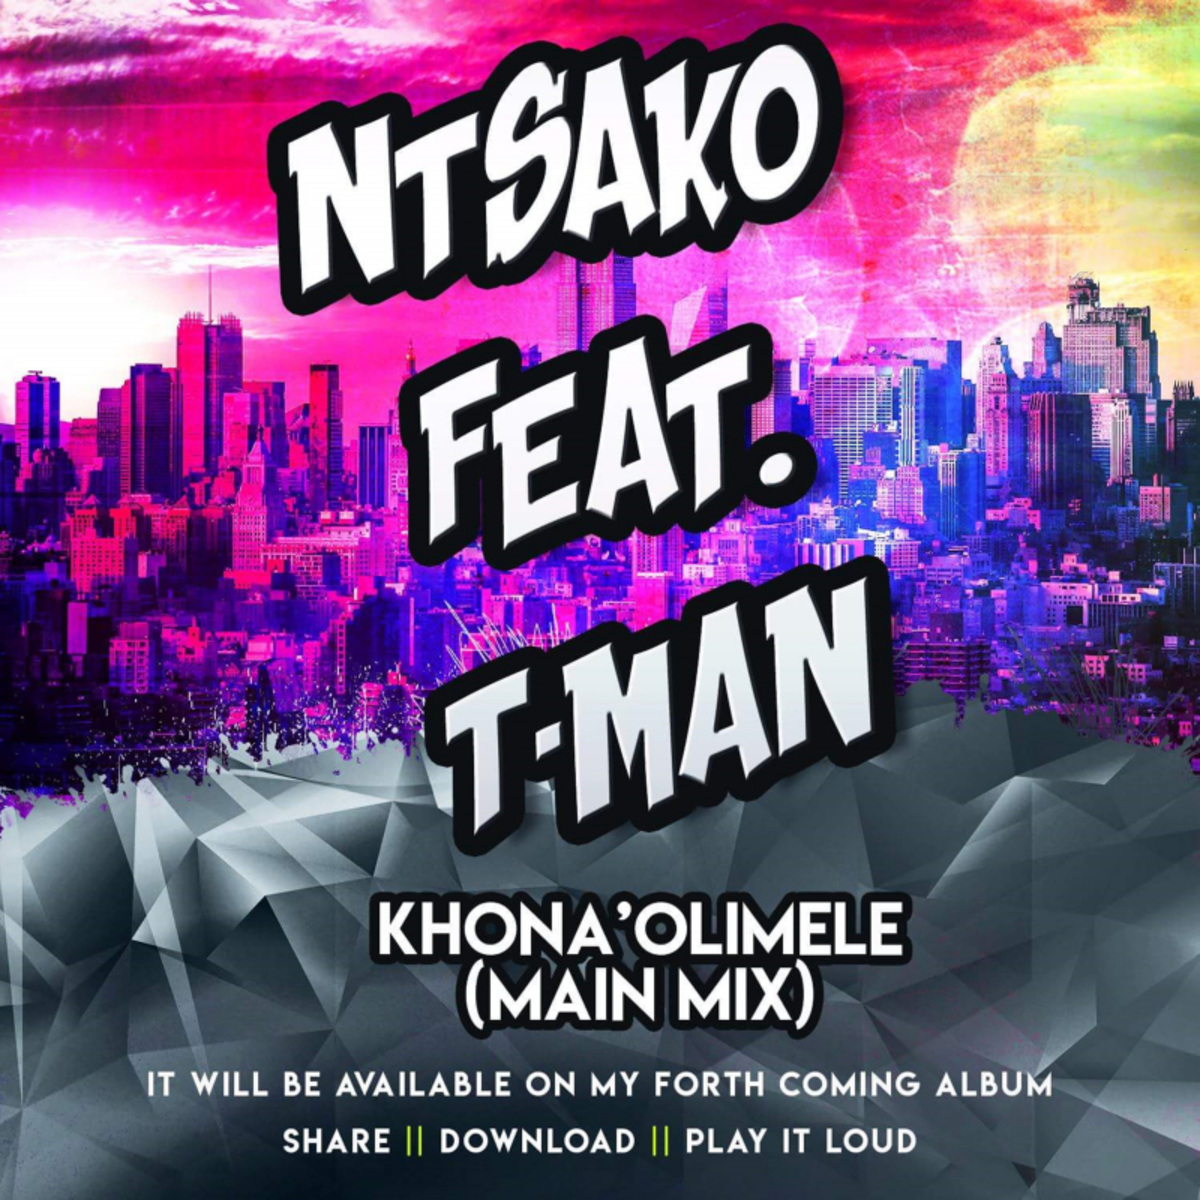 Ntsako ft Tman - Khona'Olimele / Black People Records